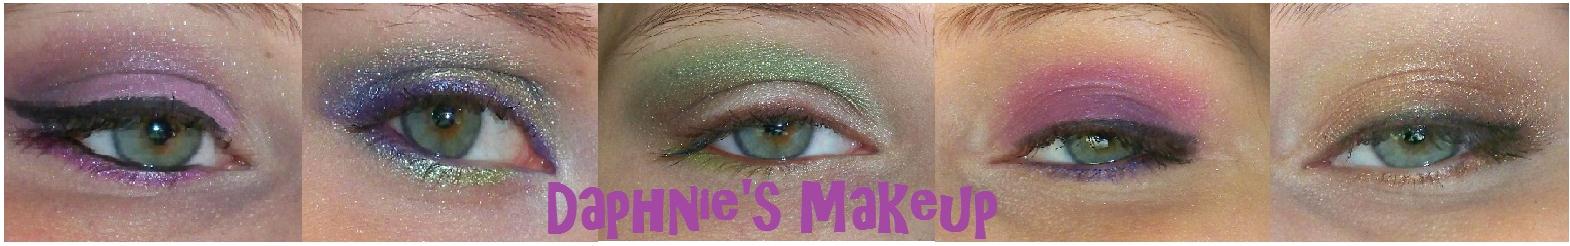 Daphnie's Makeup